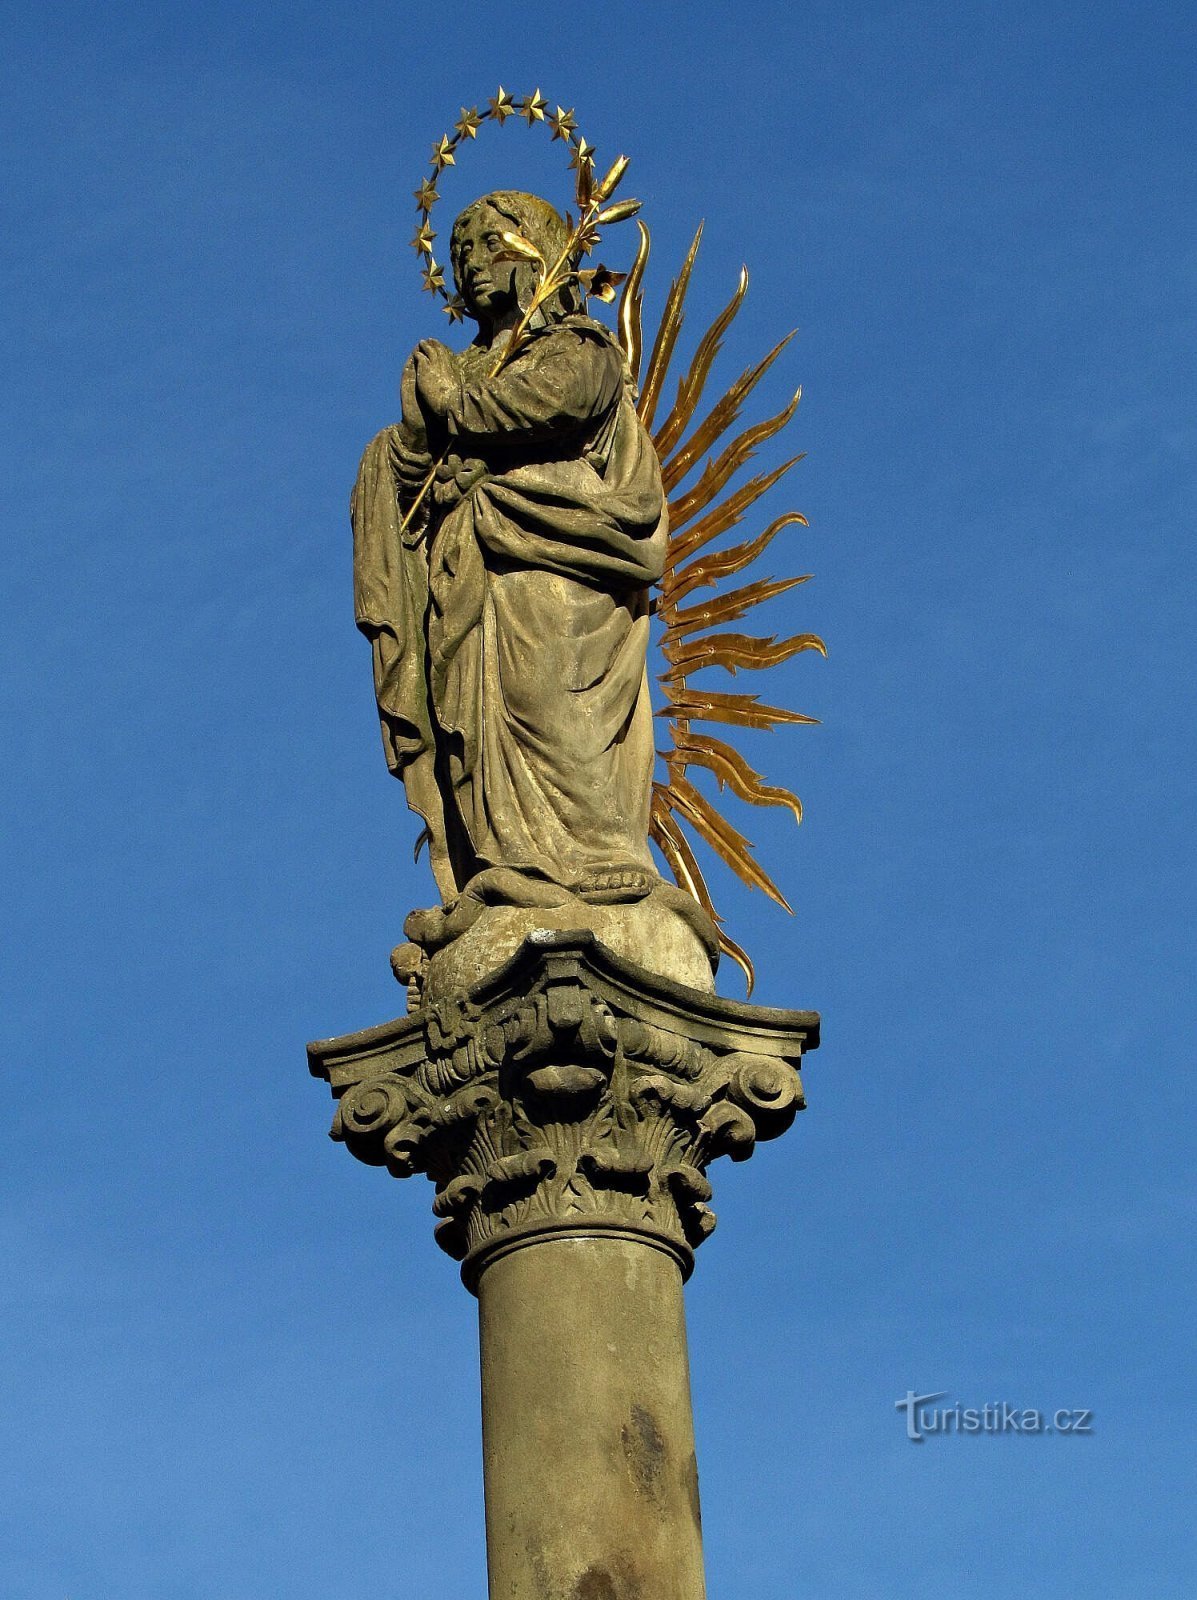 Tišnovský marijanski steber